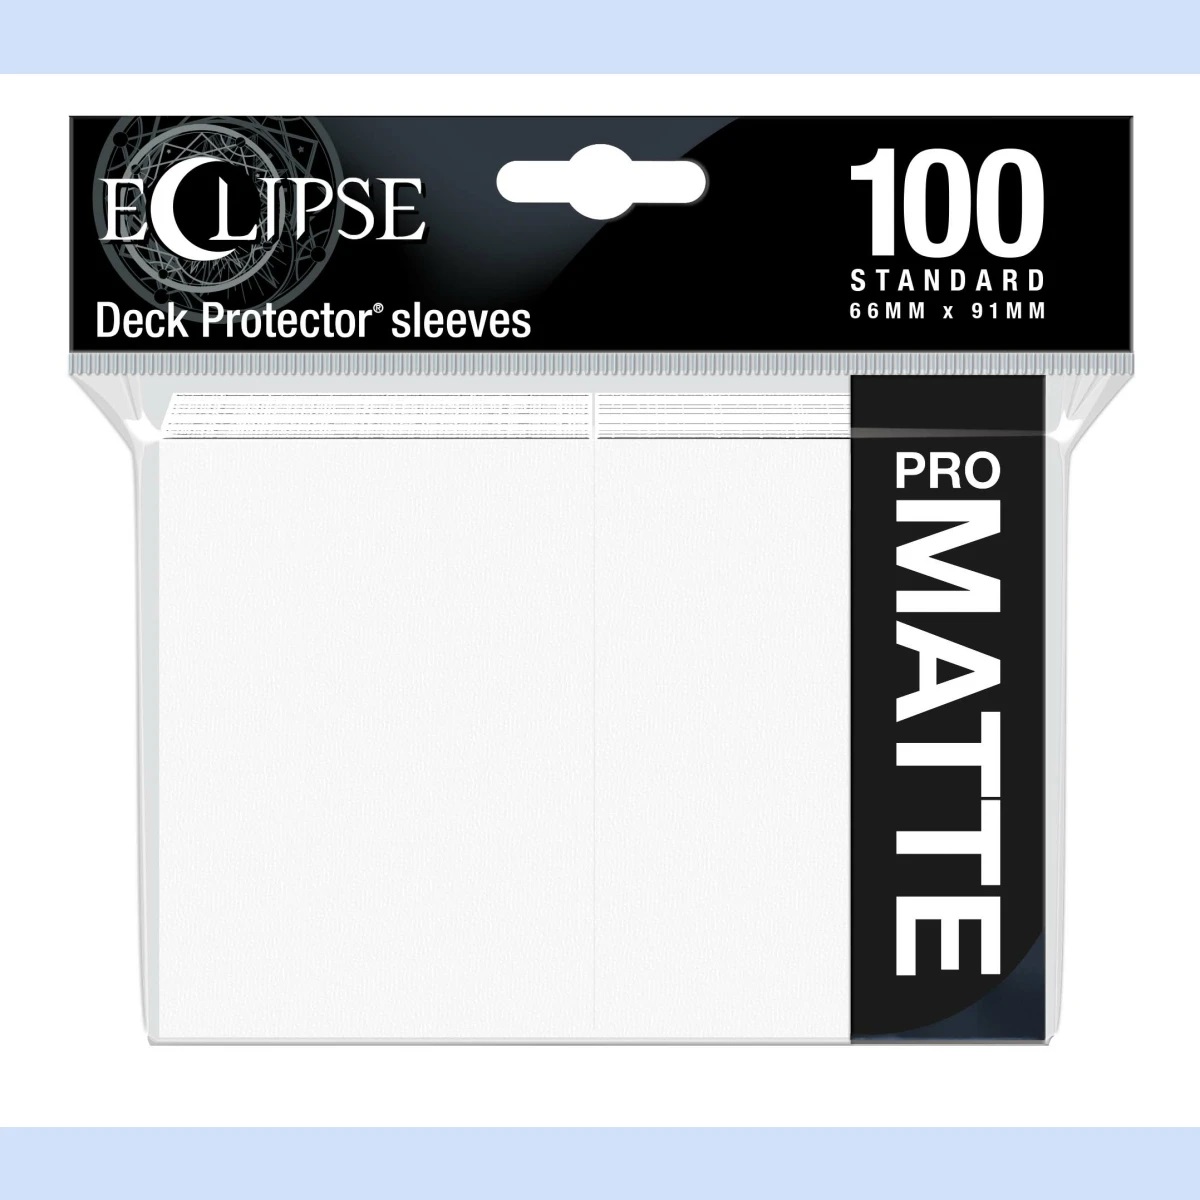 UP Deck Protector ECLIPSE Matte Artic White 100 ct von Ultra Pro